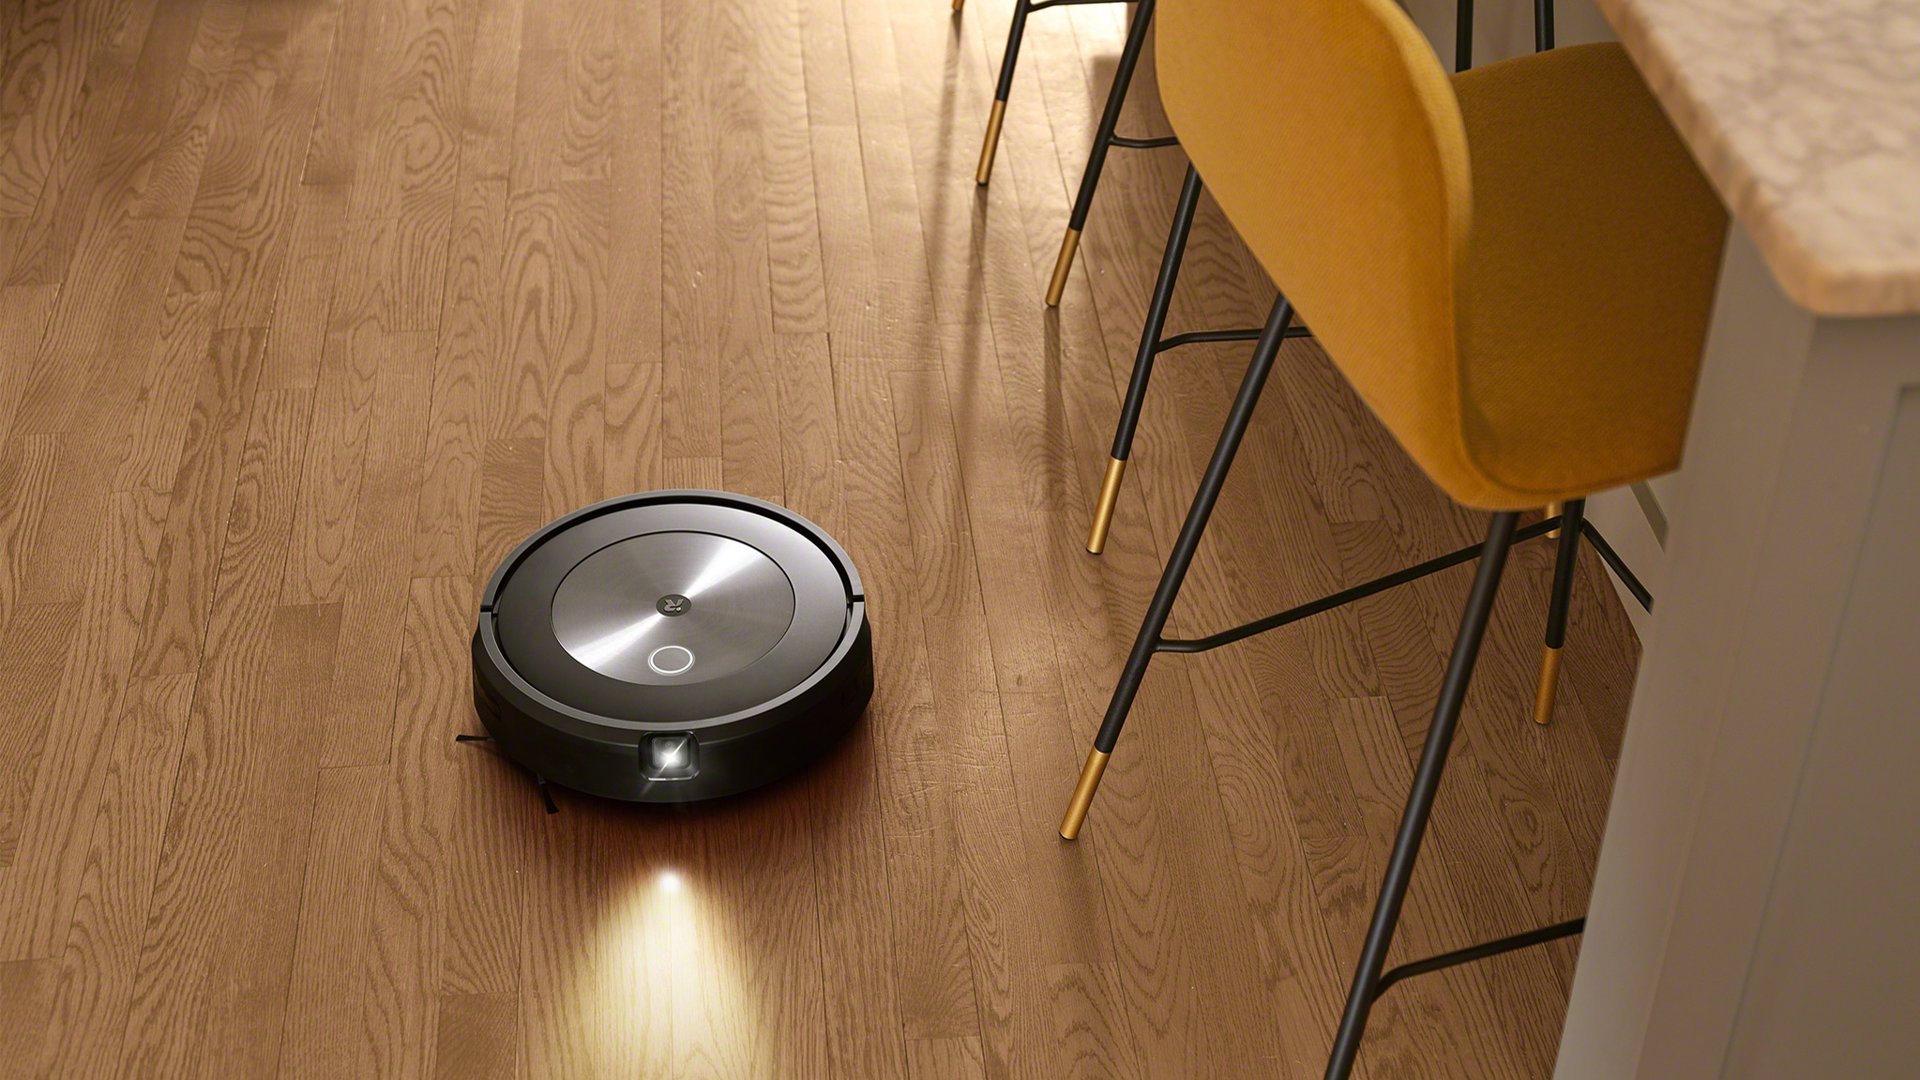 El iRobot Roomba J7+